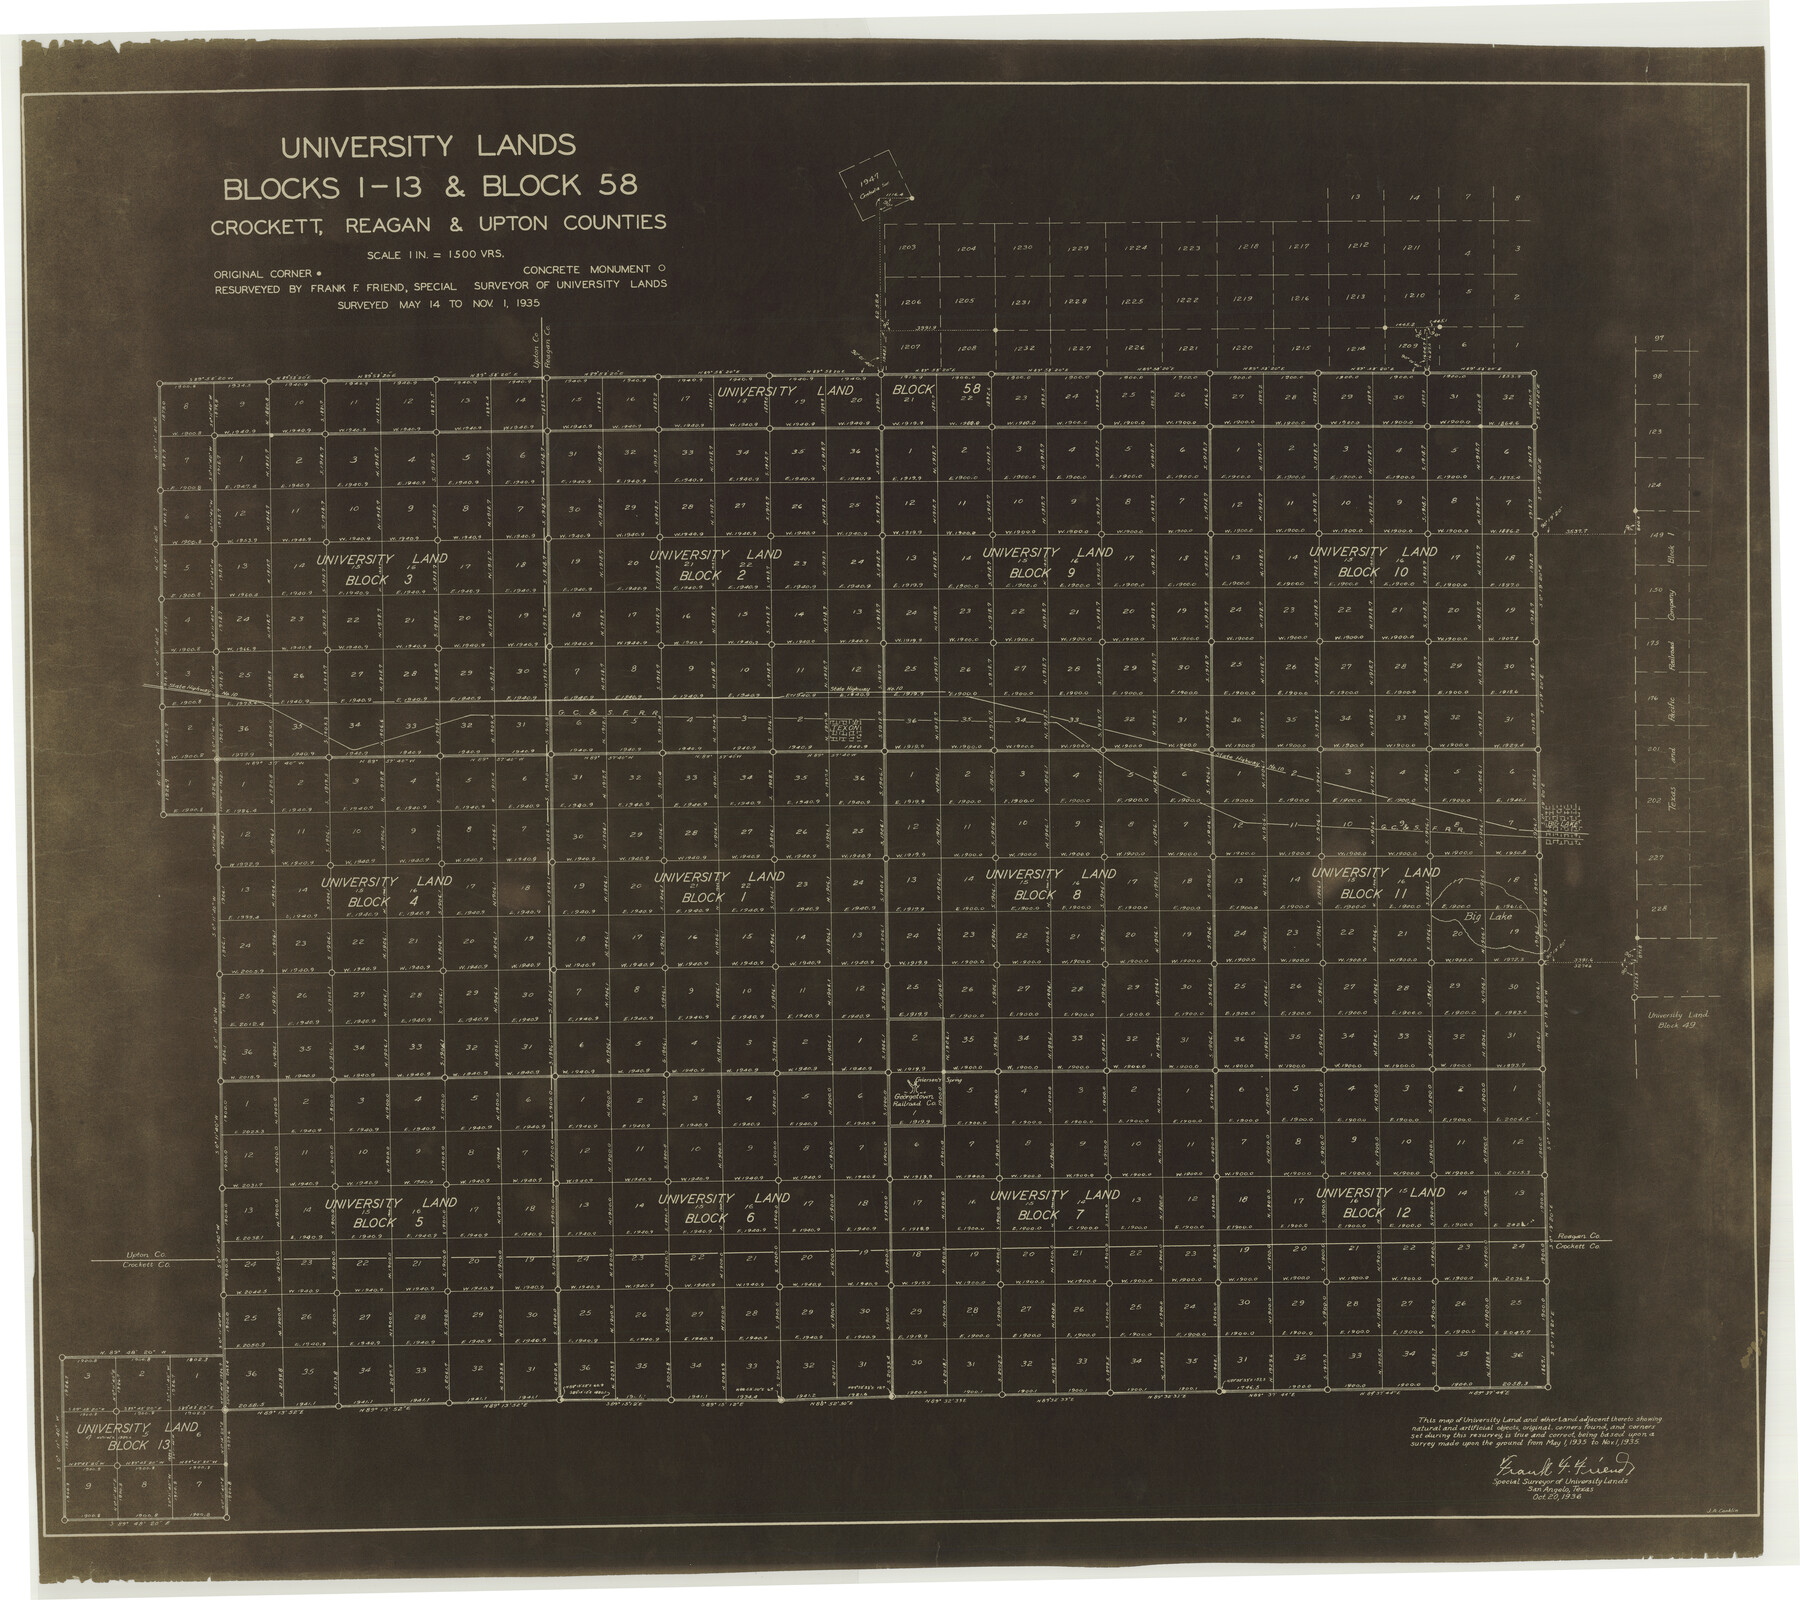 2445, University Lands Blocks 1-13 & Block 58, Crockett, Reagan & Upton Counties, General Map Collection